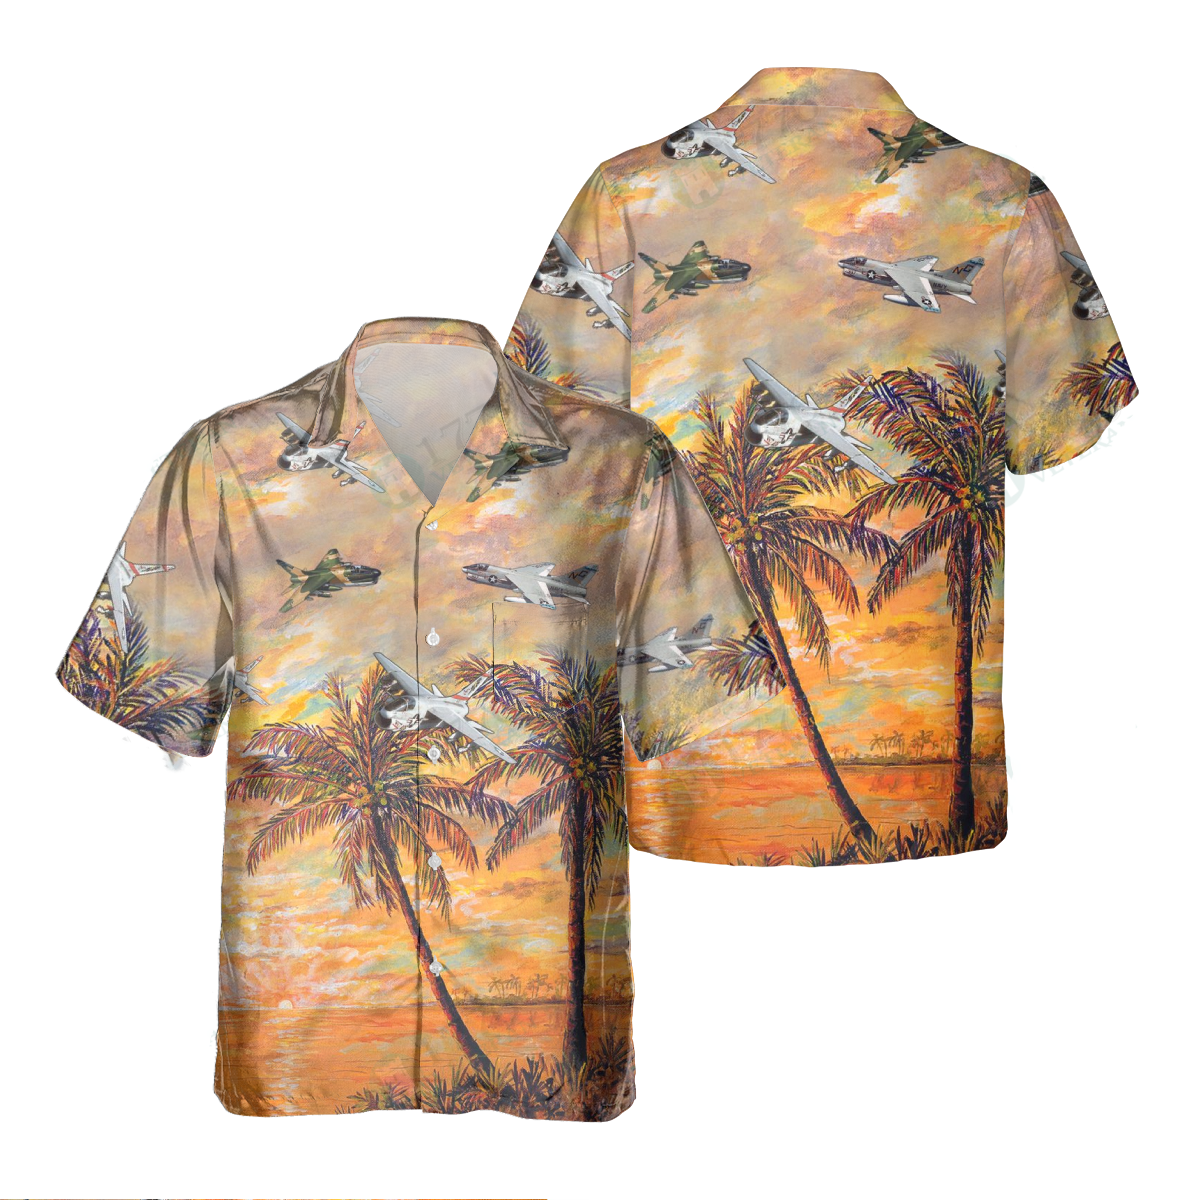 A-7 Corsair Ii_Pocket Hawaiian Shirt/ Hawaiian Shirt for Men Dad Veteran/ Patriot Day